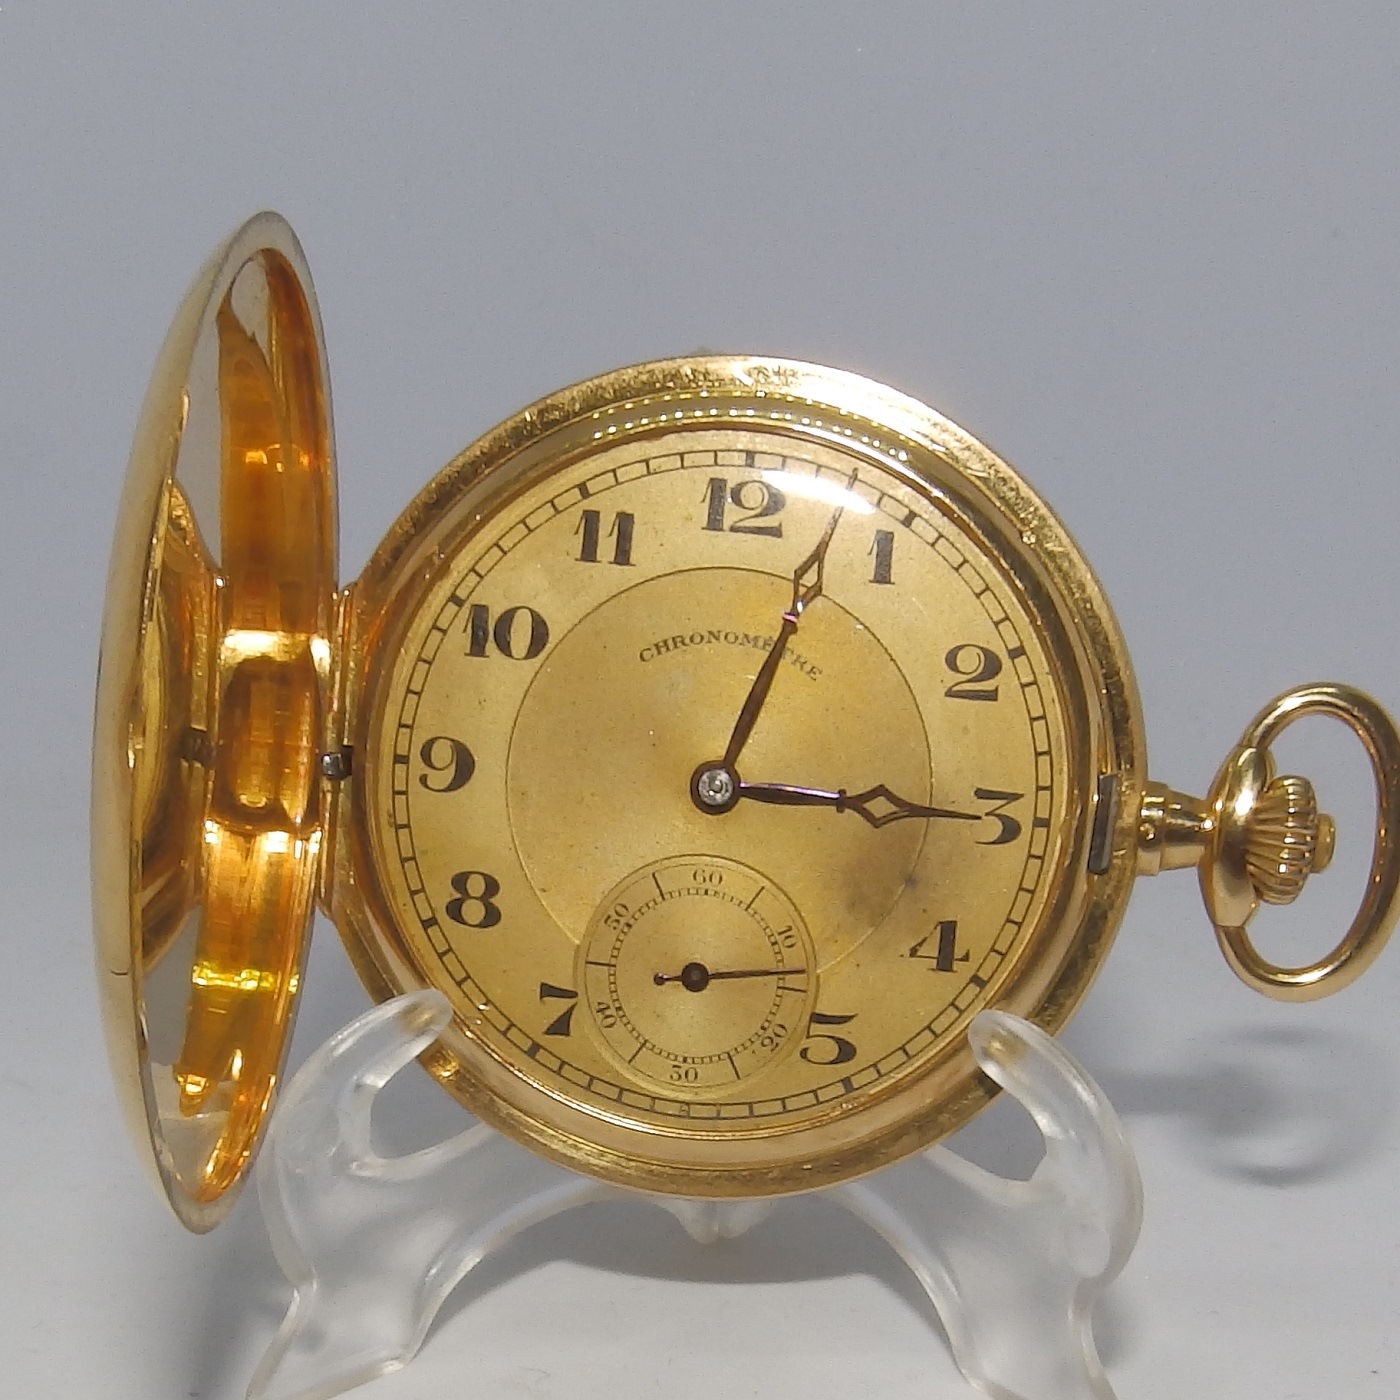 Incorrecto Parcial bomba CHRONOMETRE. FG. Reloj de Bolsillo, saboneta y remontoir. Oro 18k. Suiza,  Ca. 1890. Subastas Fígaro